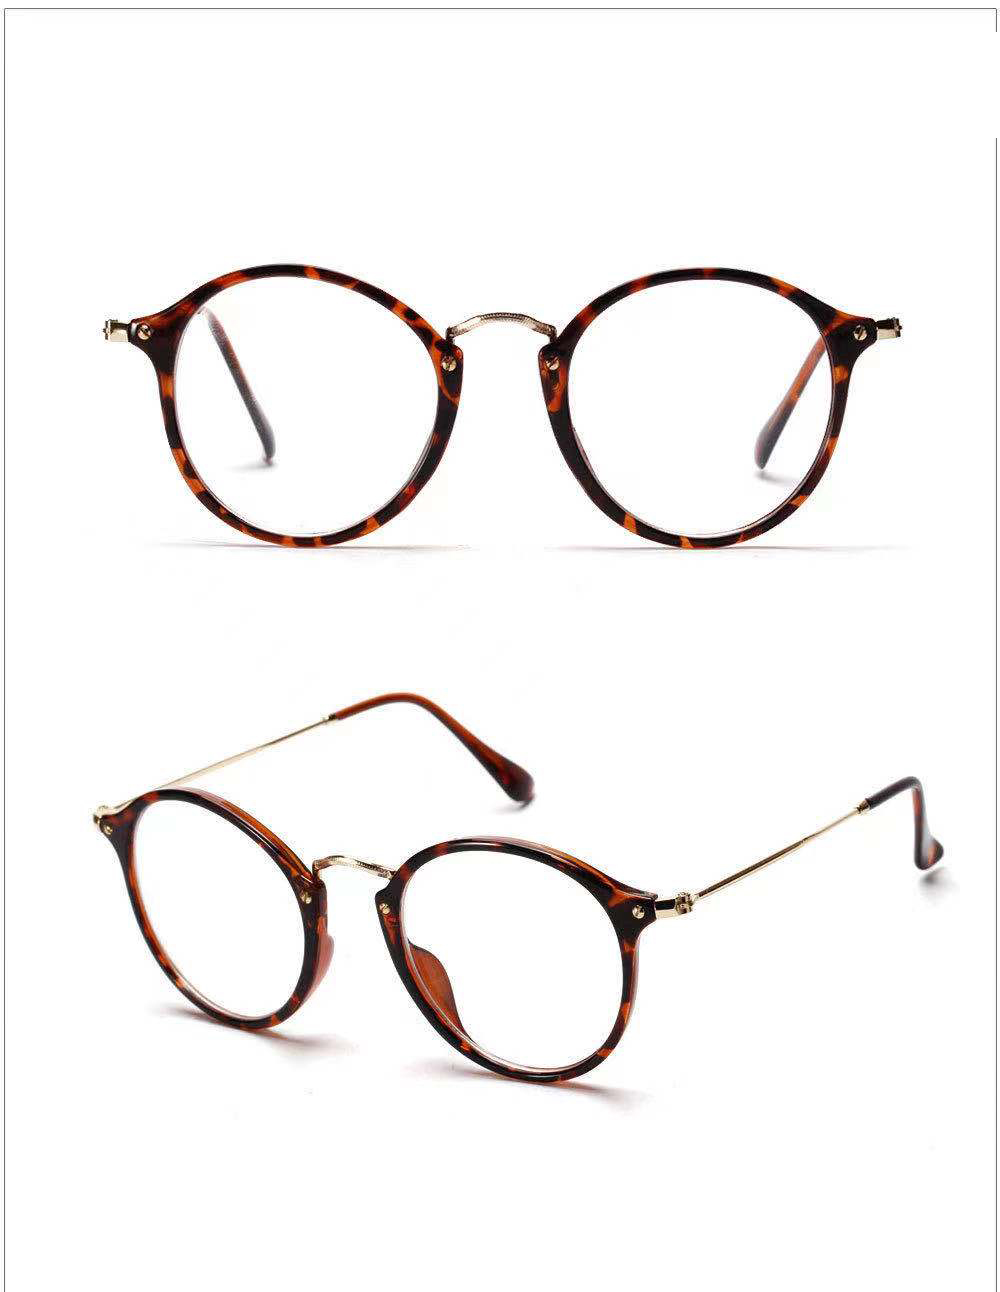 2021 New product round slim cp metal combination eyewear thin optical eyeglasses frames women decoration eyeglasses